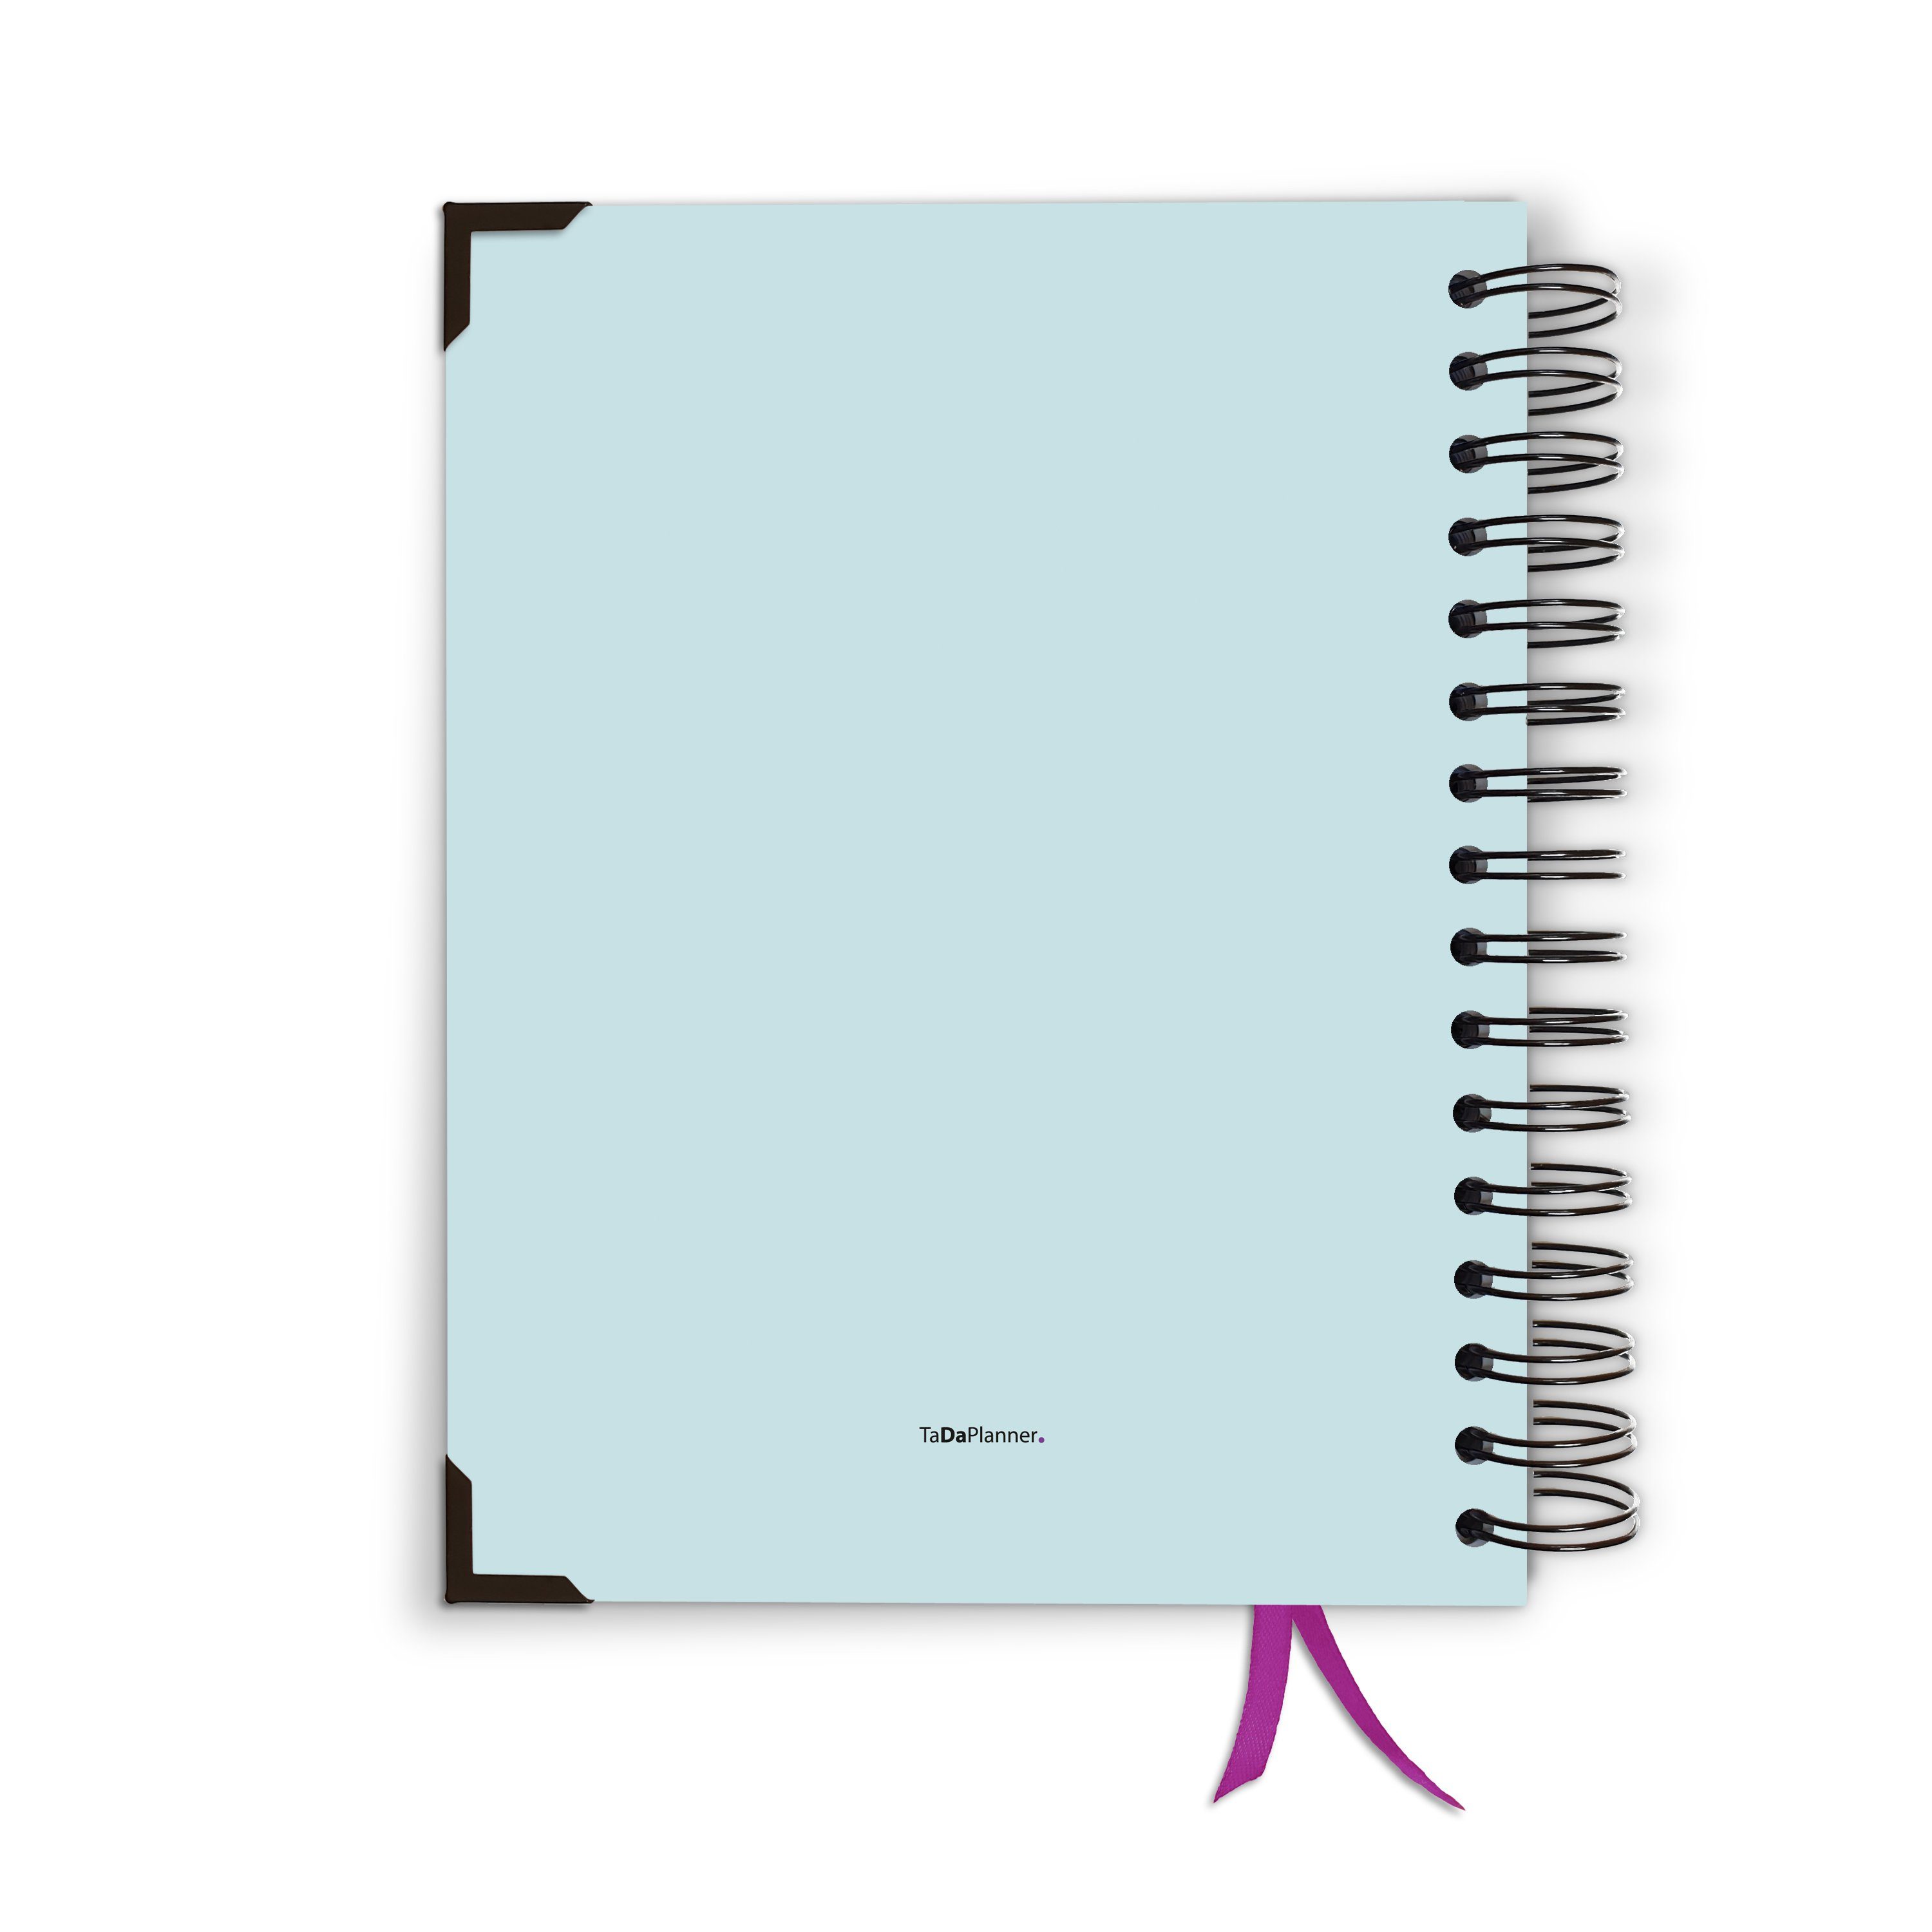 Bujo, TaDa TaDa Bullet Notizbuch 180 Planner Handmade Premium Dotted Planner Journal Tagebuch Seiten Notizbuch